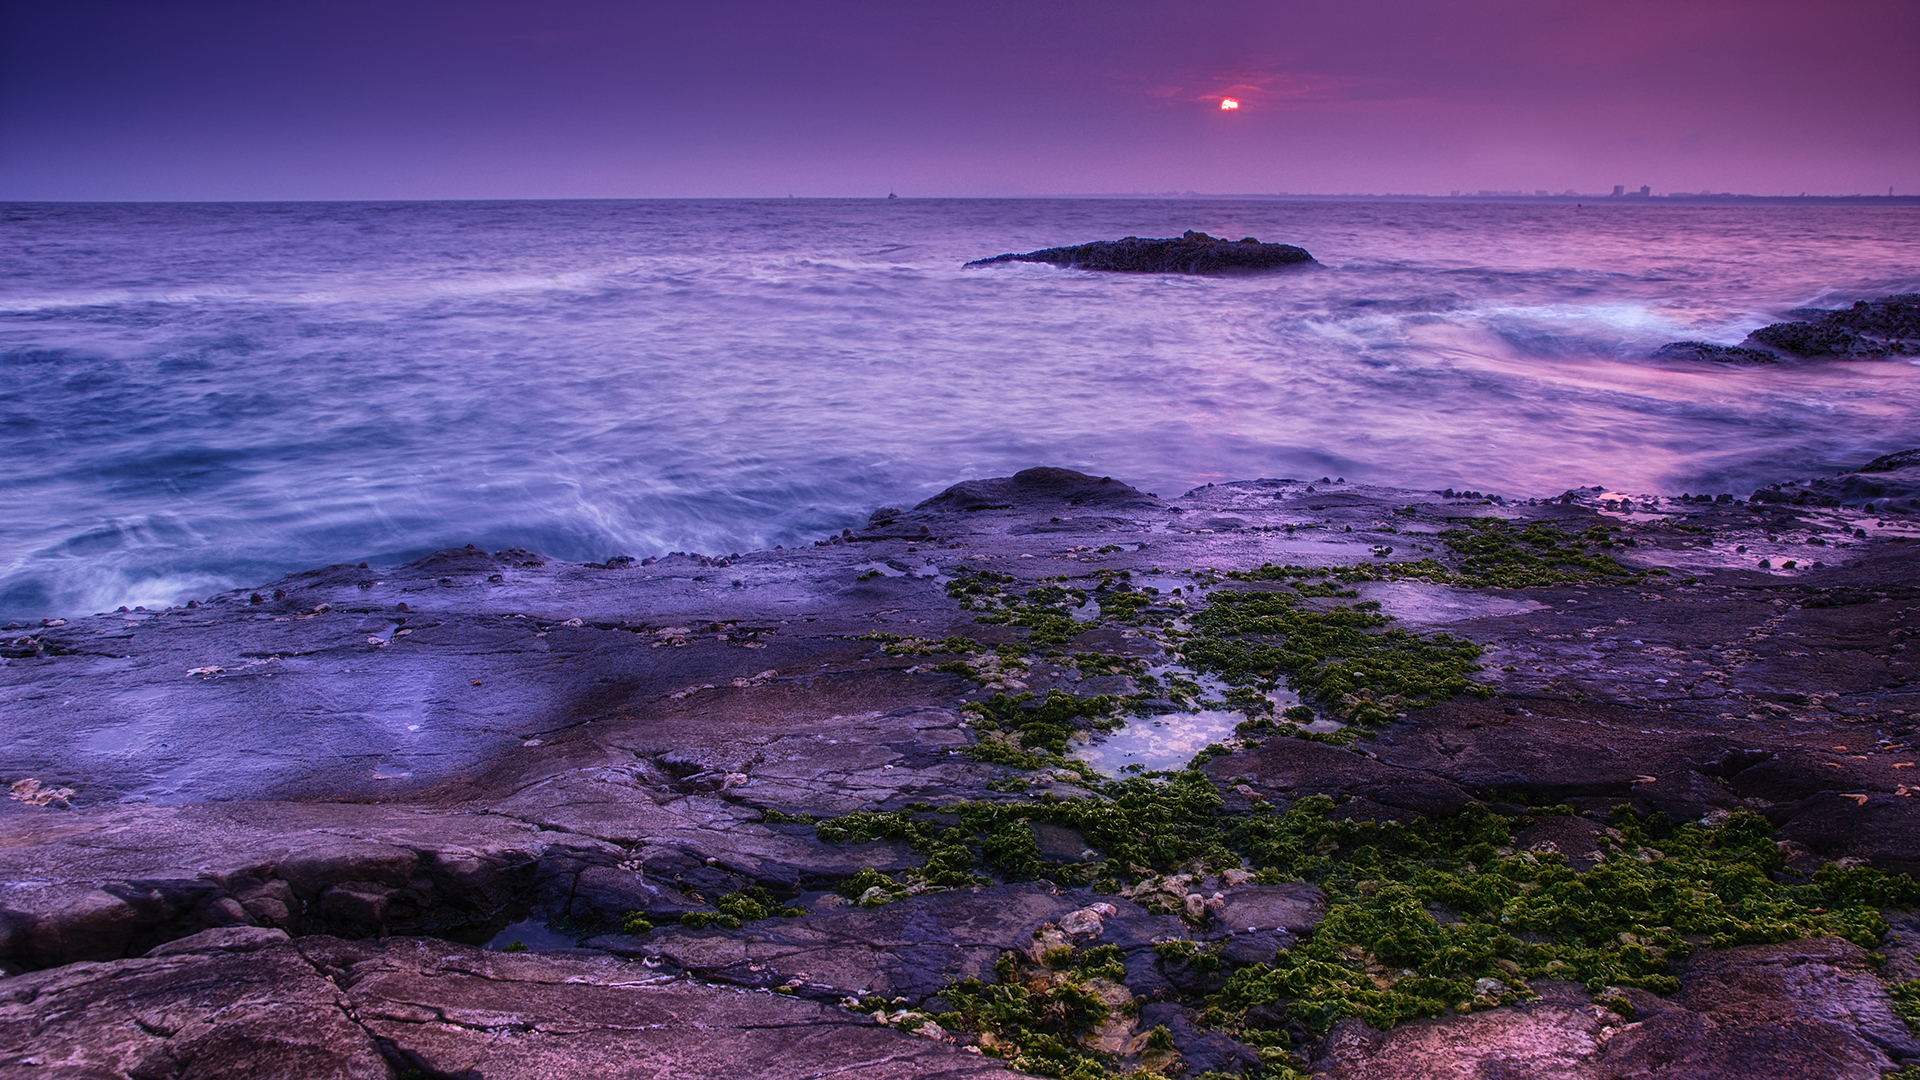 General 1920x1080 enoshima Japan island sunset HDR long exposure sea purple sky beach